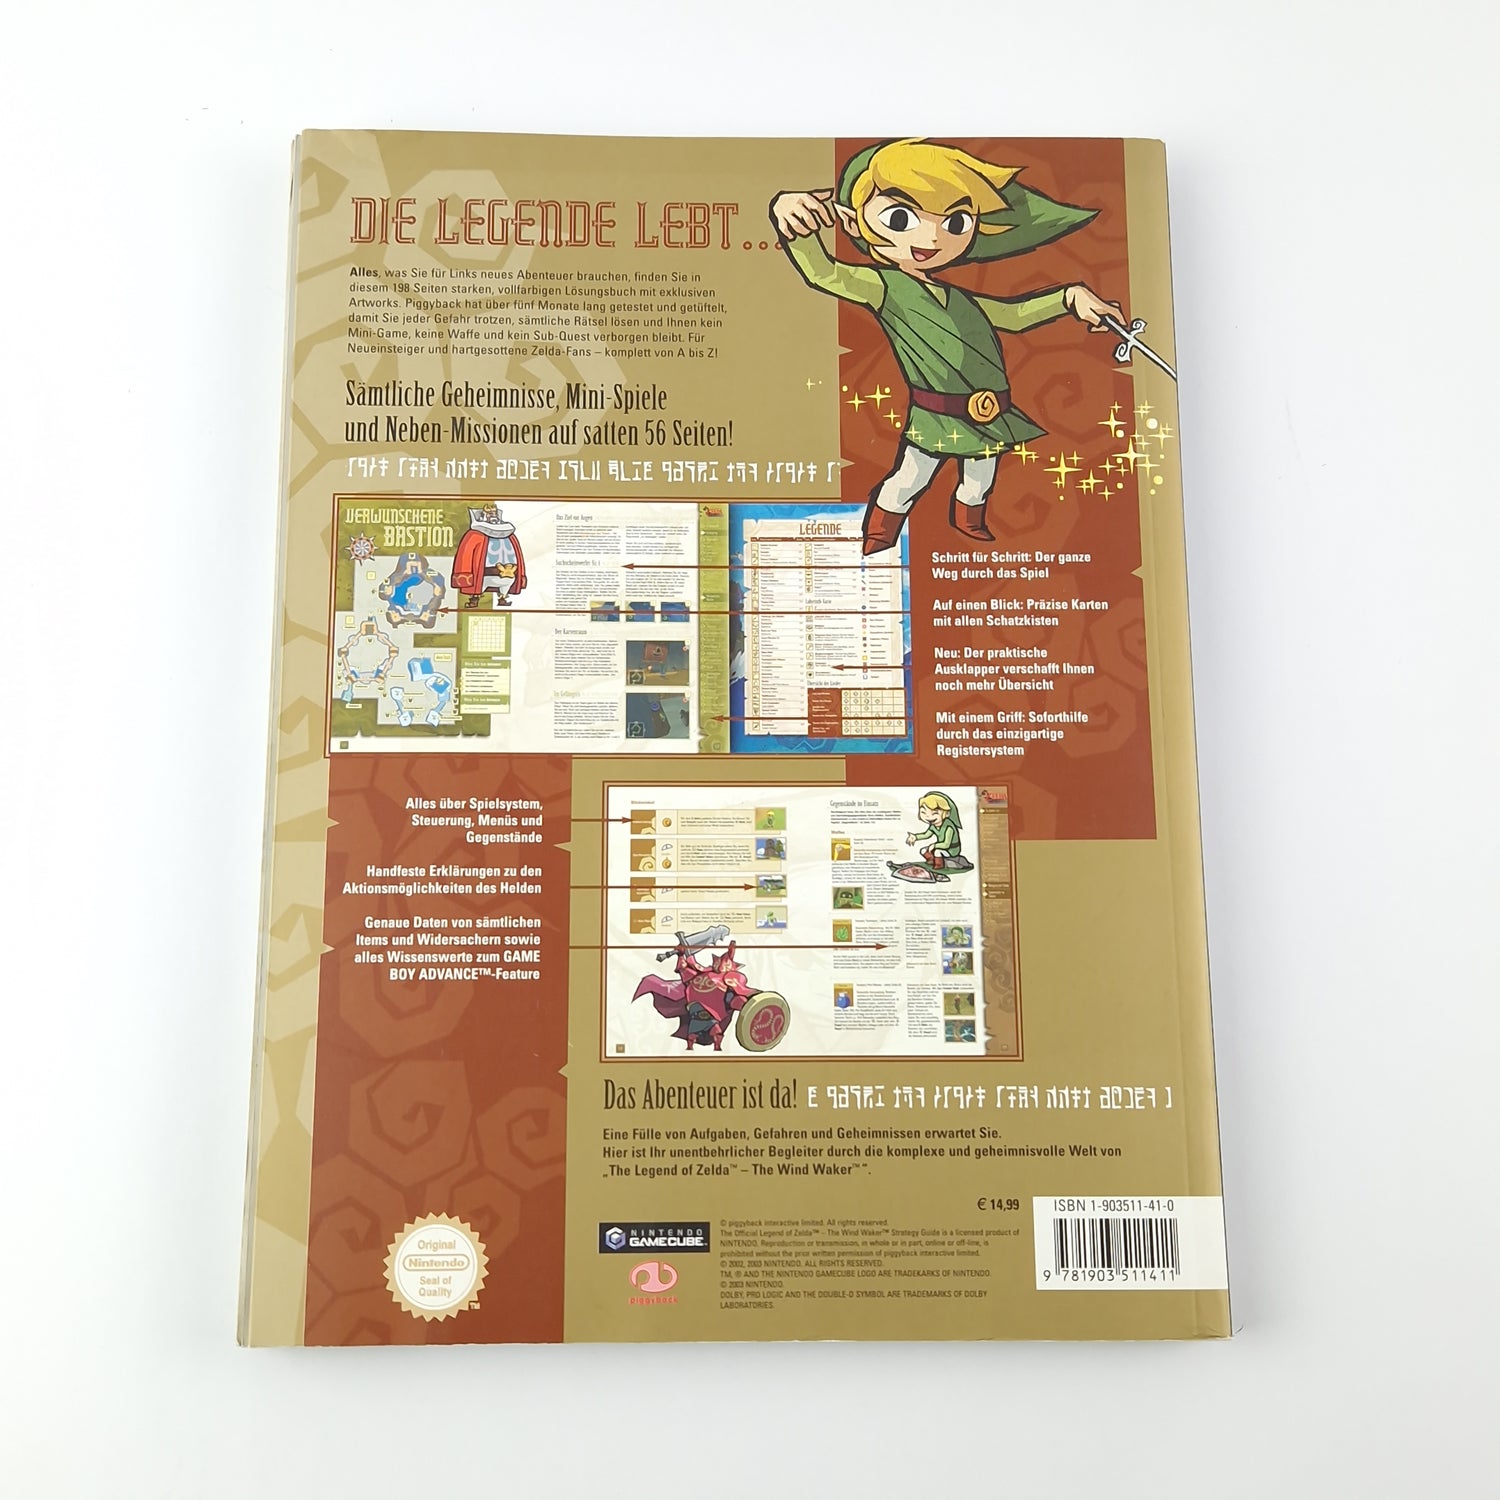 The Legend of Zelda The Windwaker Solution Book / Game Advisor Gamecube